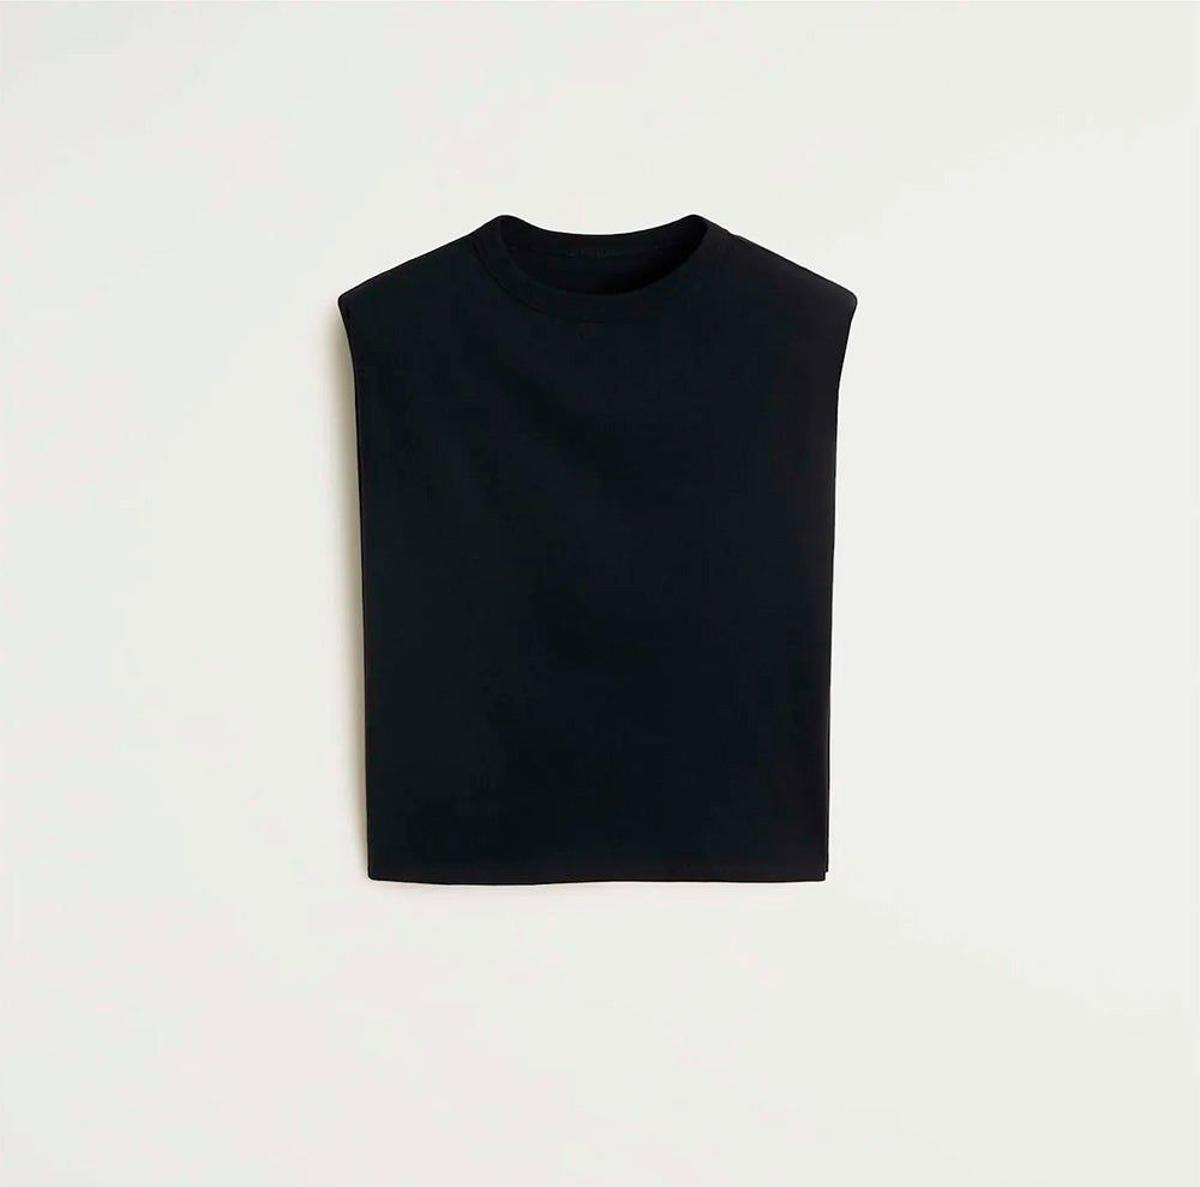 Camiseta con hombreras negra de Mango. (Precio: 15,99 euros)